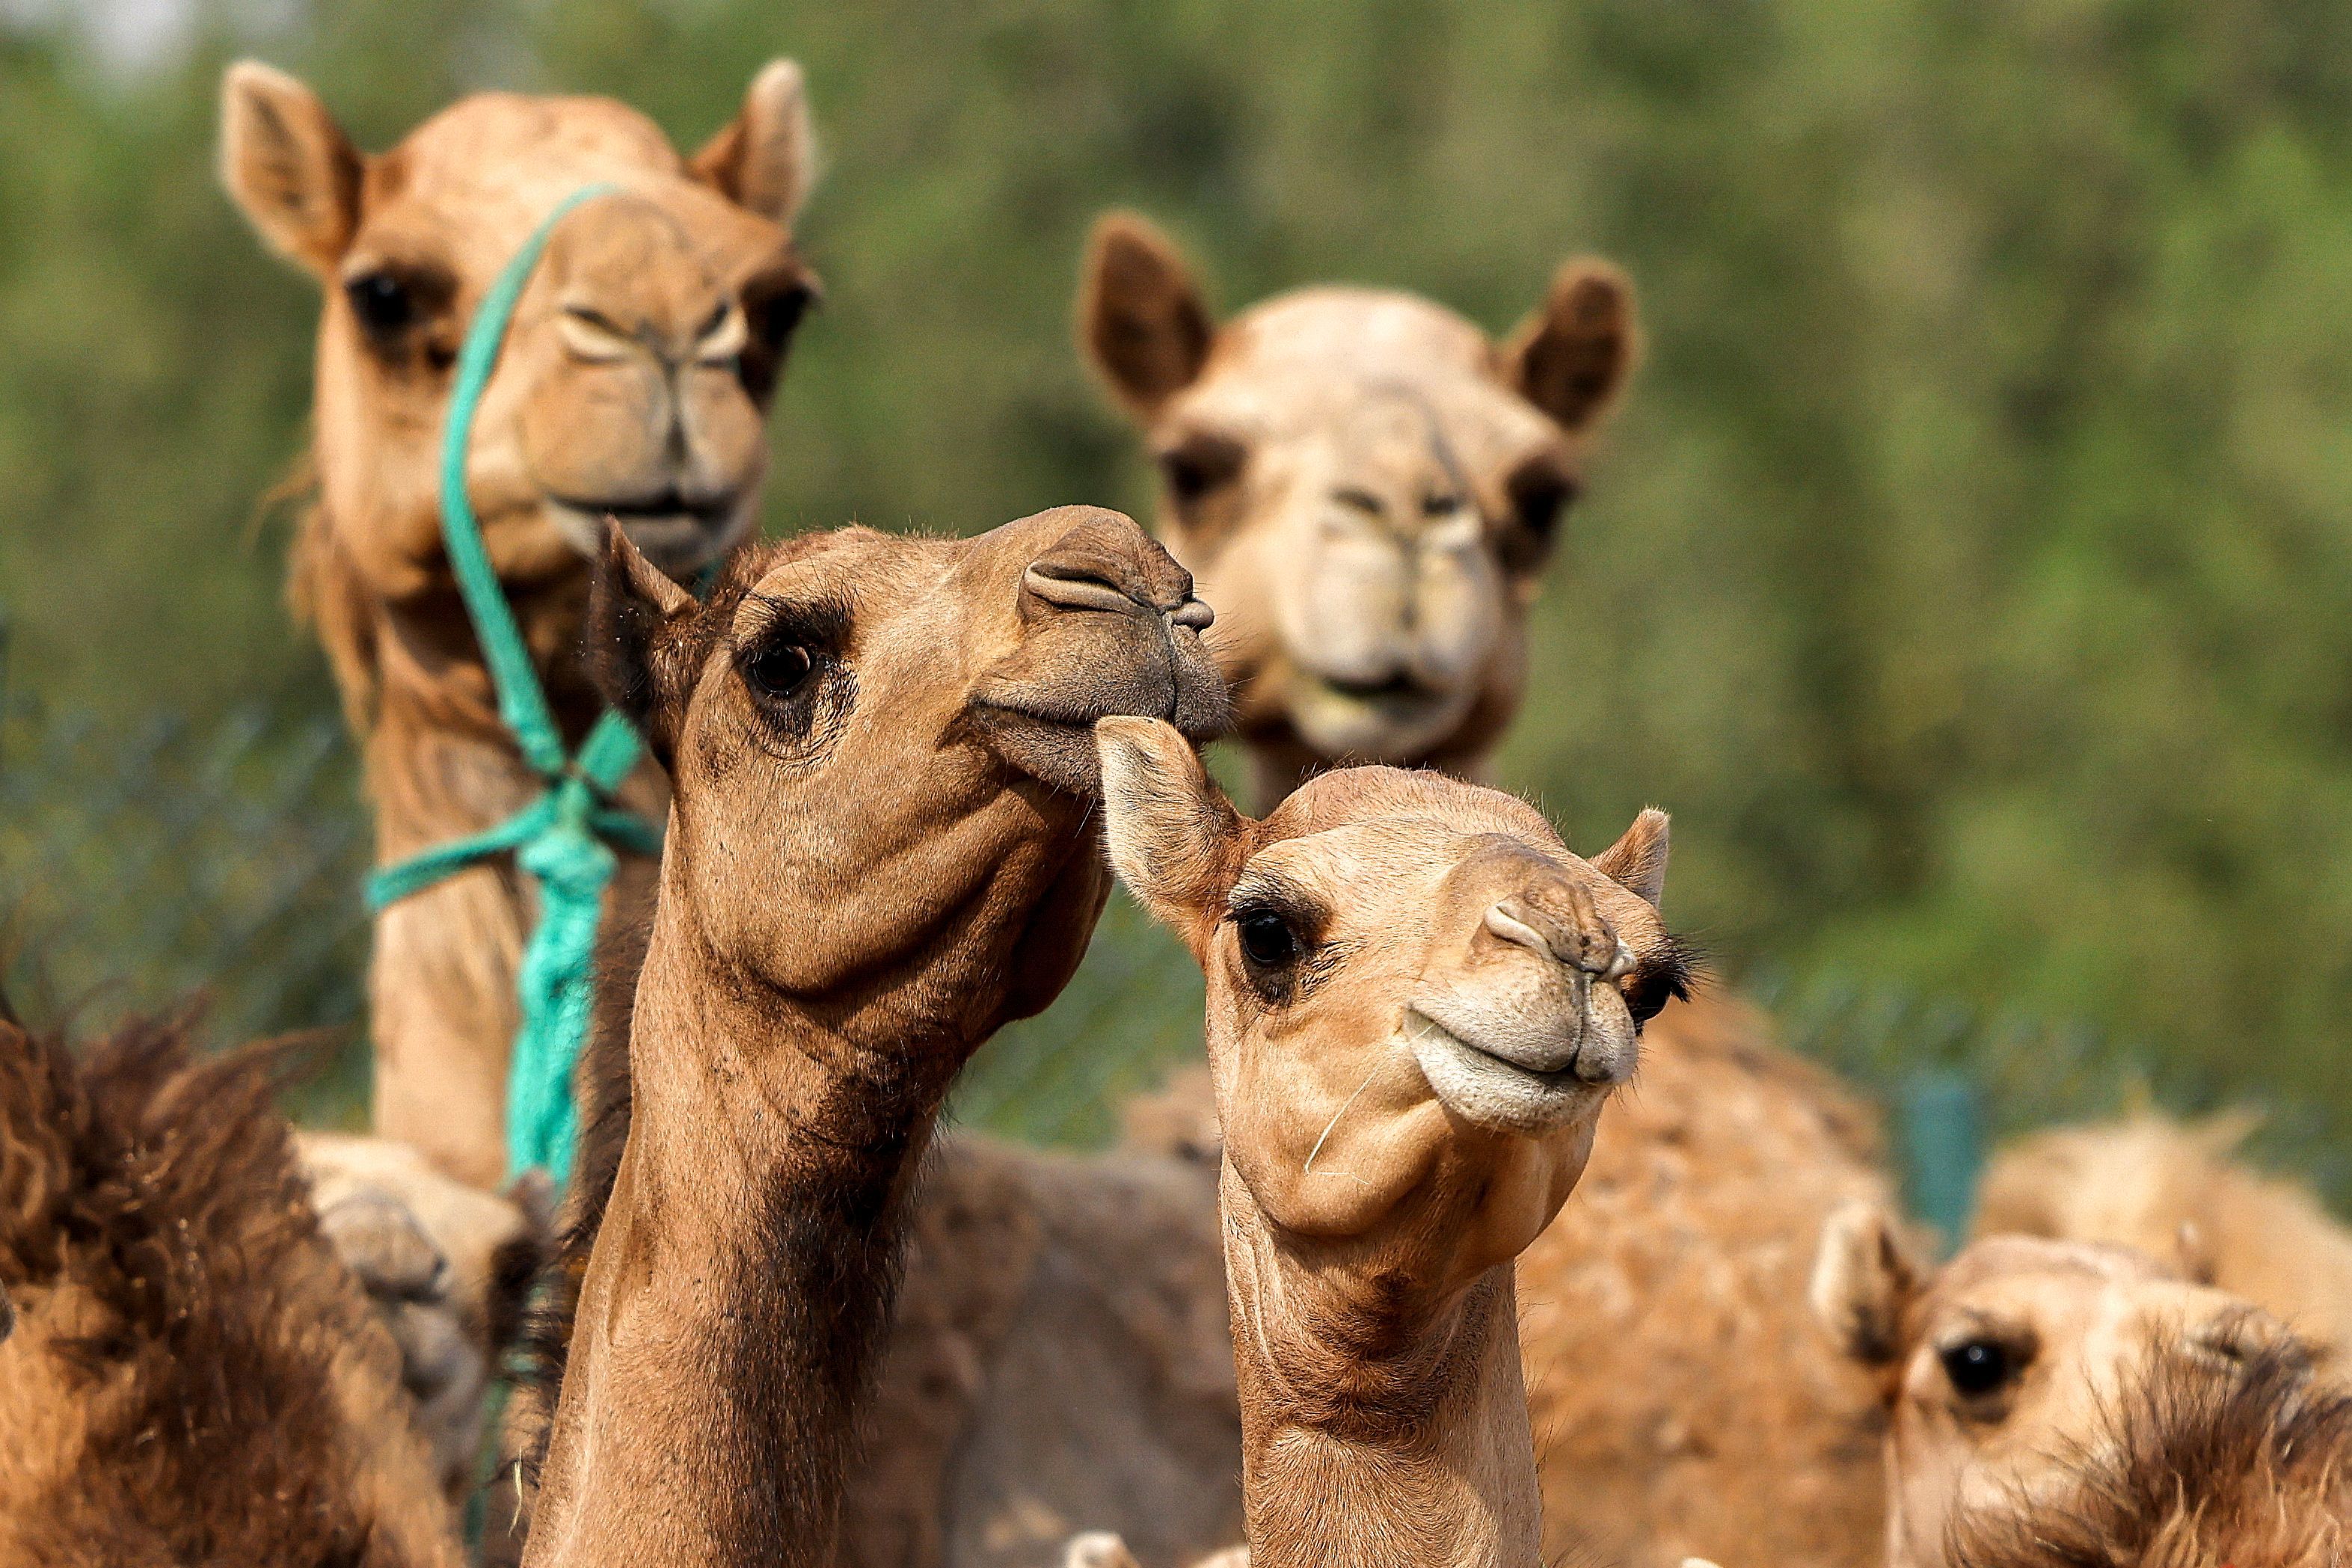 Why camel cloning is big business in Dubai | CNN